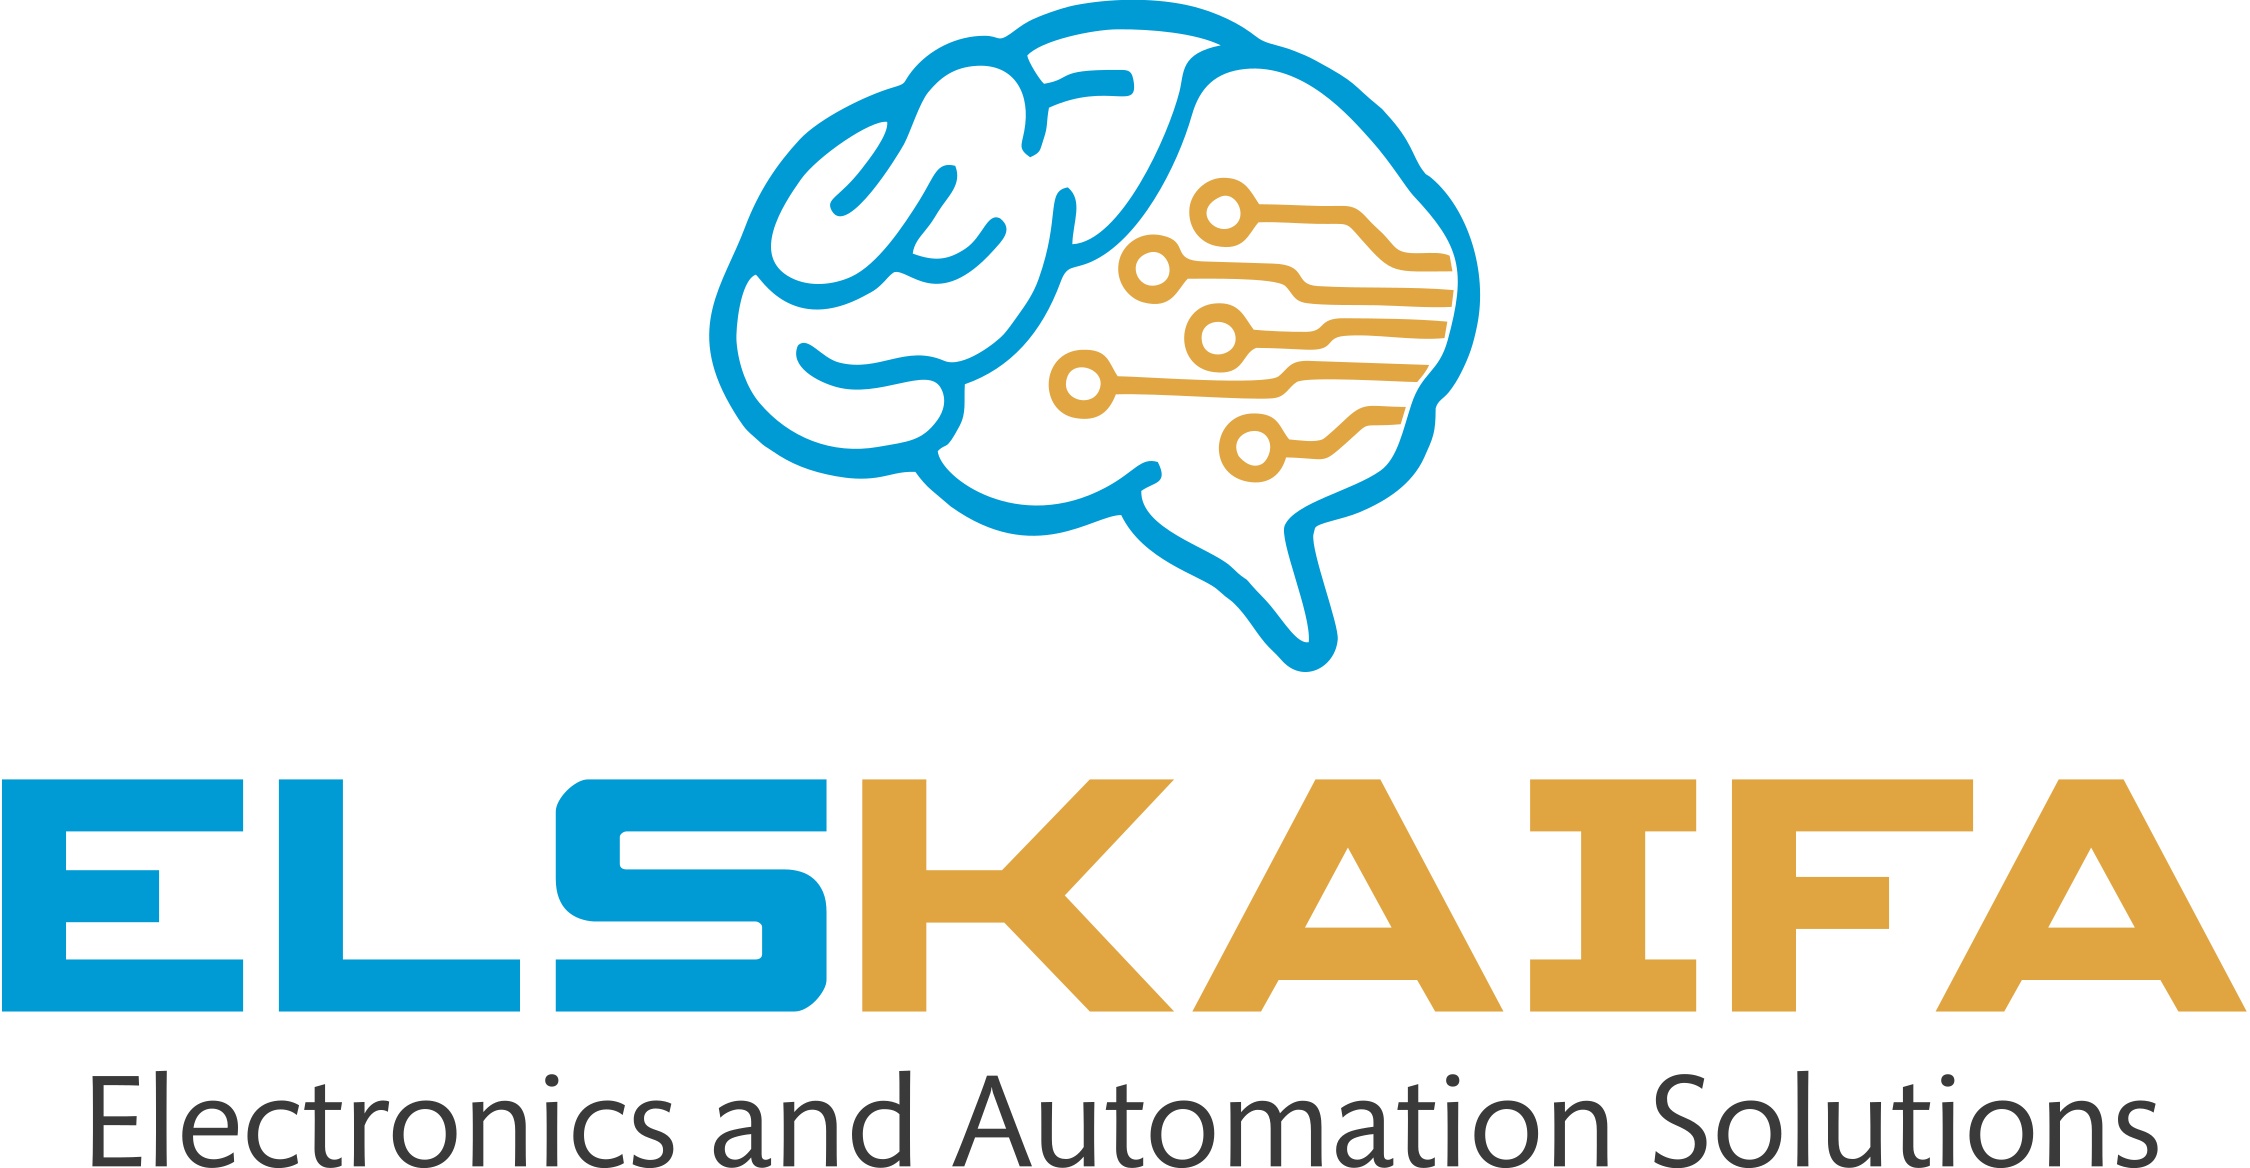 ELSKAIFA – Electronics and Automation Solutions